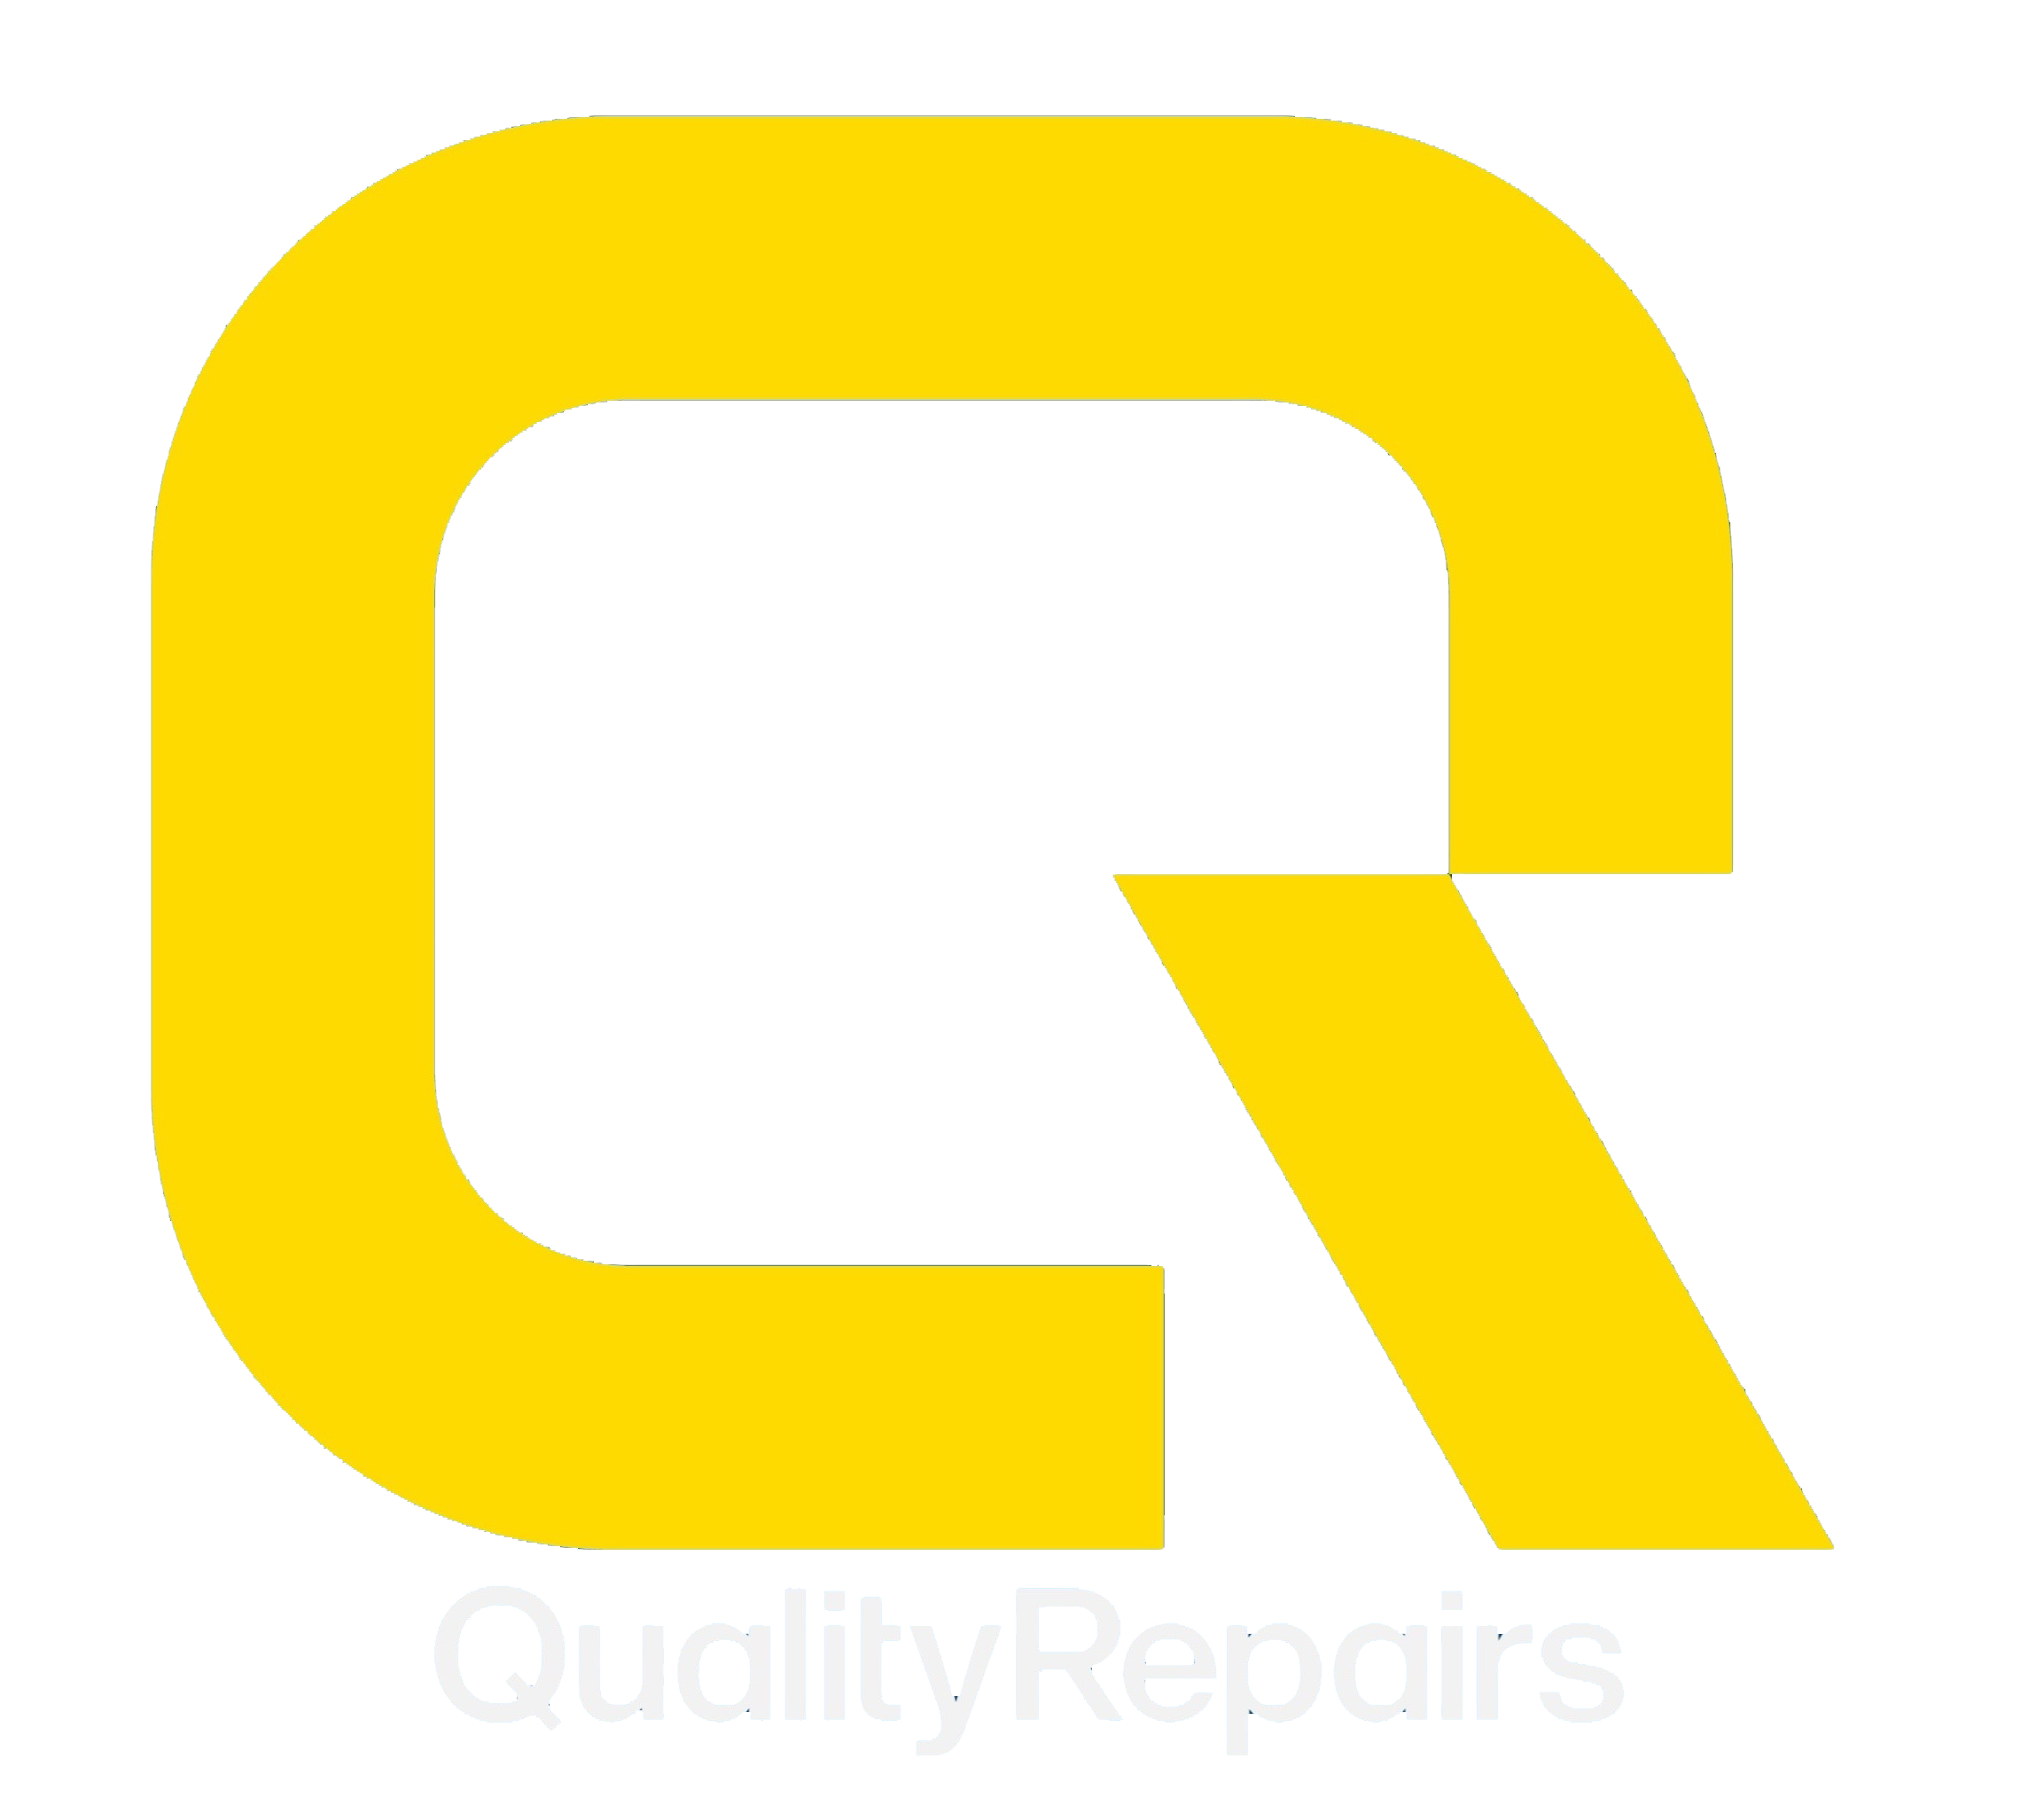 Quality Repairs